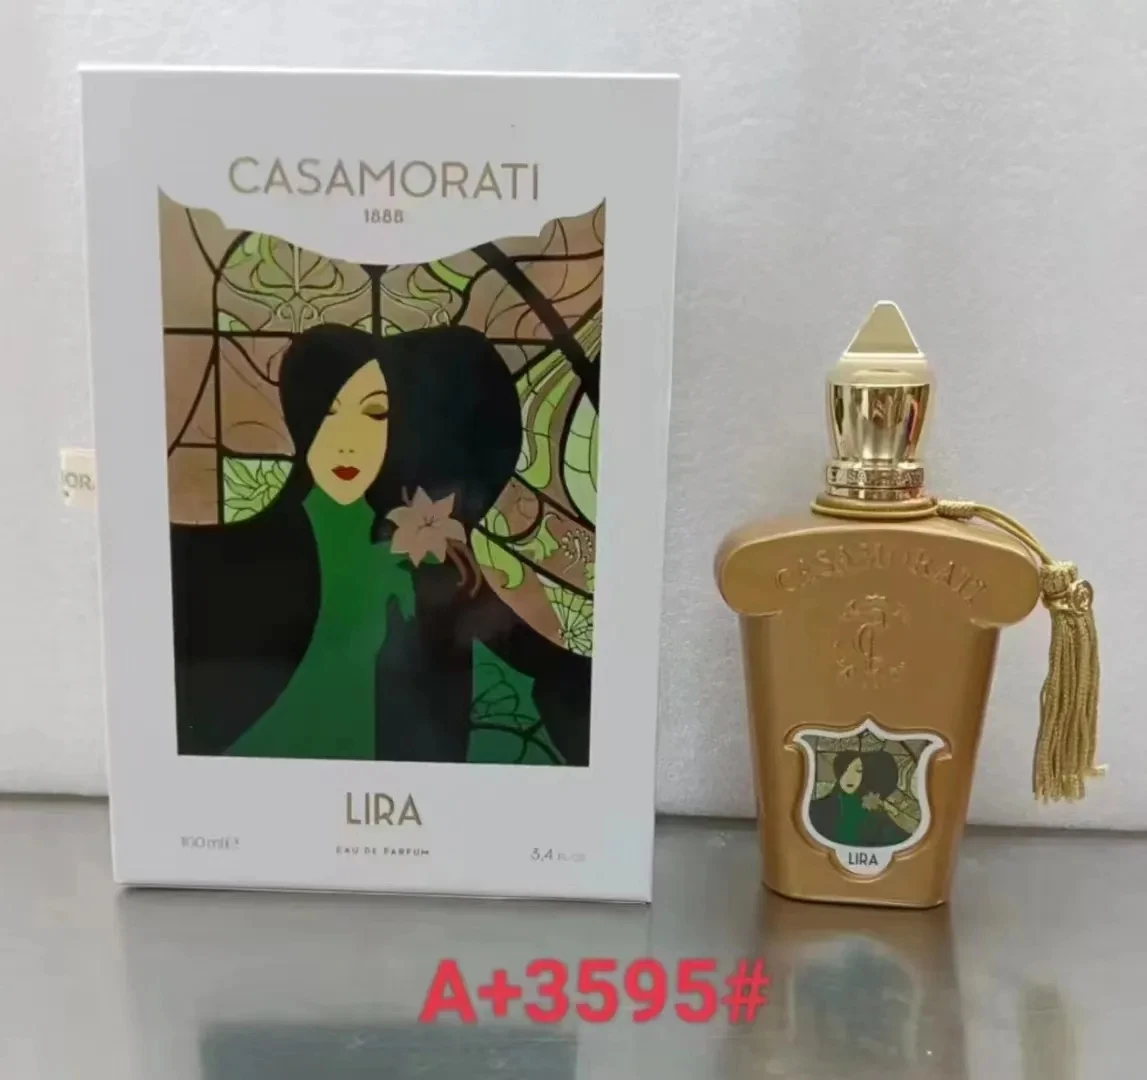 

Casamorati Lira 1888 Mefisto Bouquet Ideale La Tosca Perfume Fragrance 3.4Oz EDP Men Women Cologne Spray100Ml with Gift